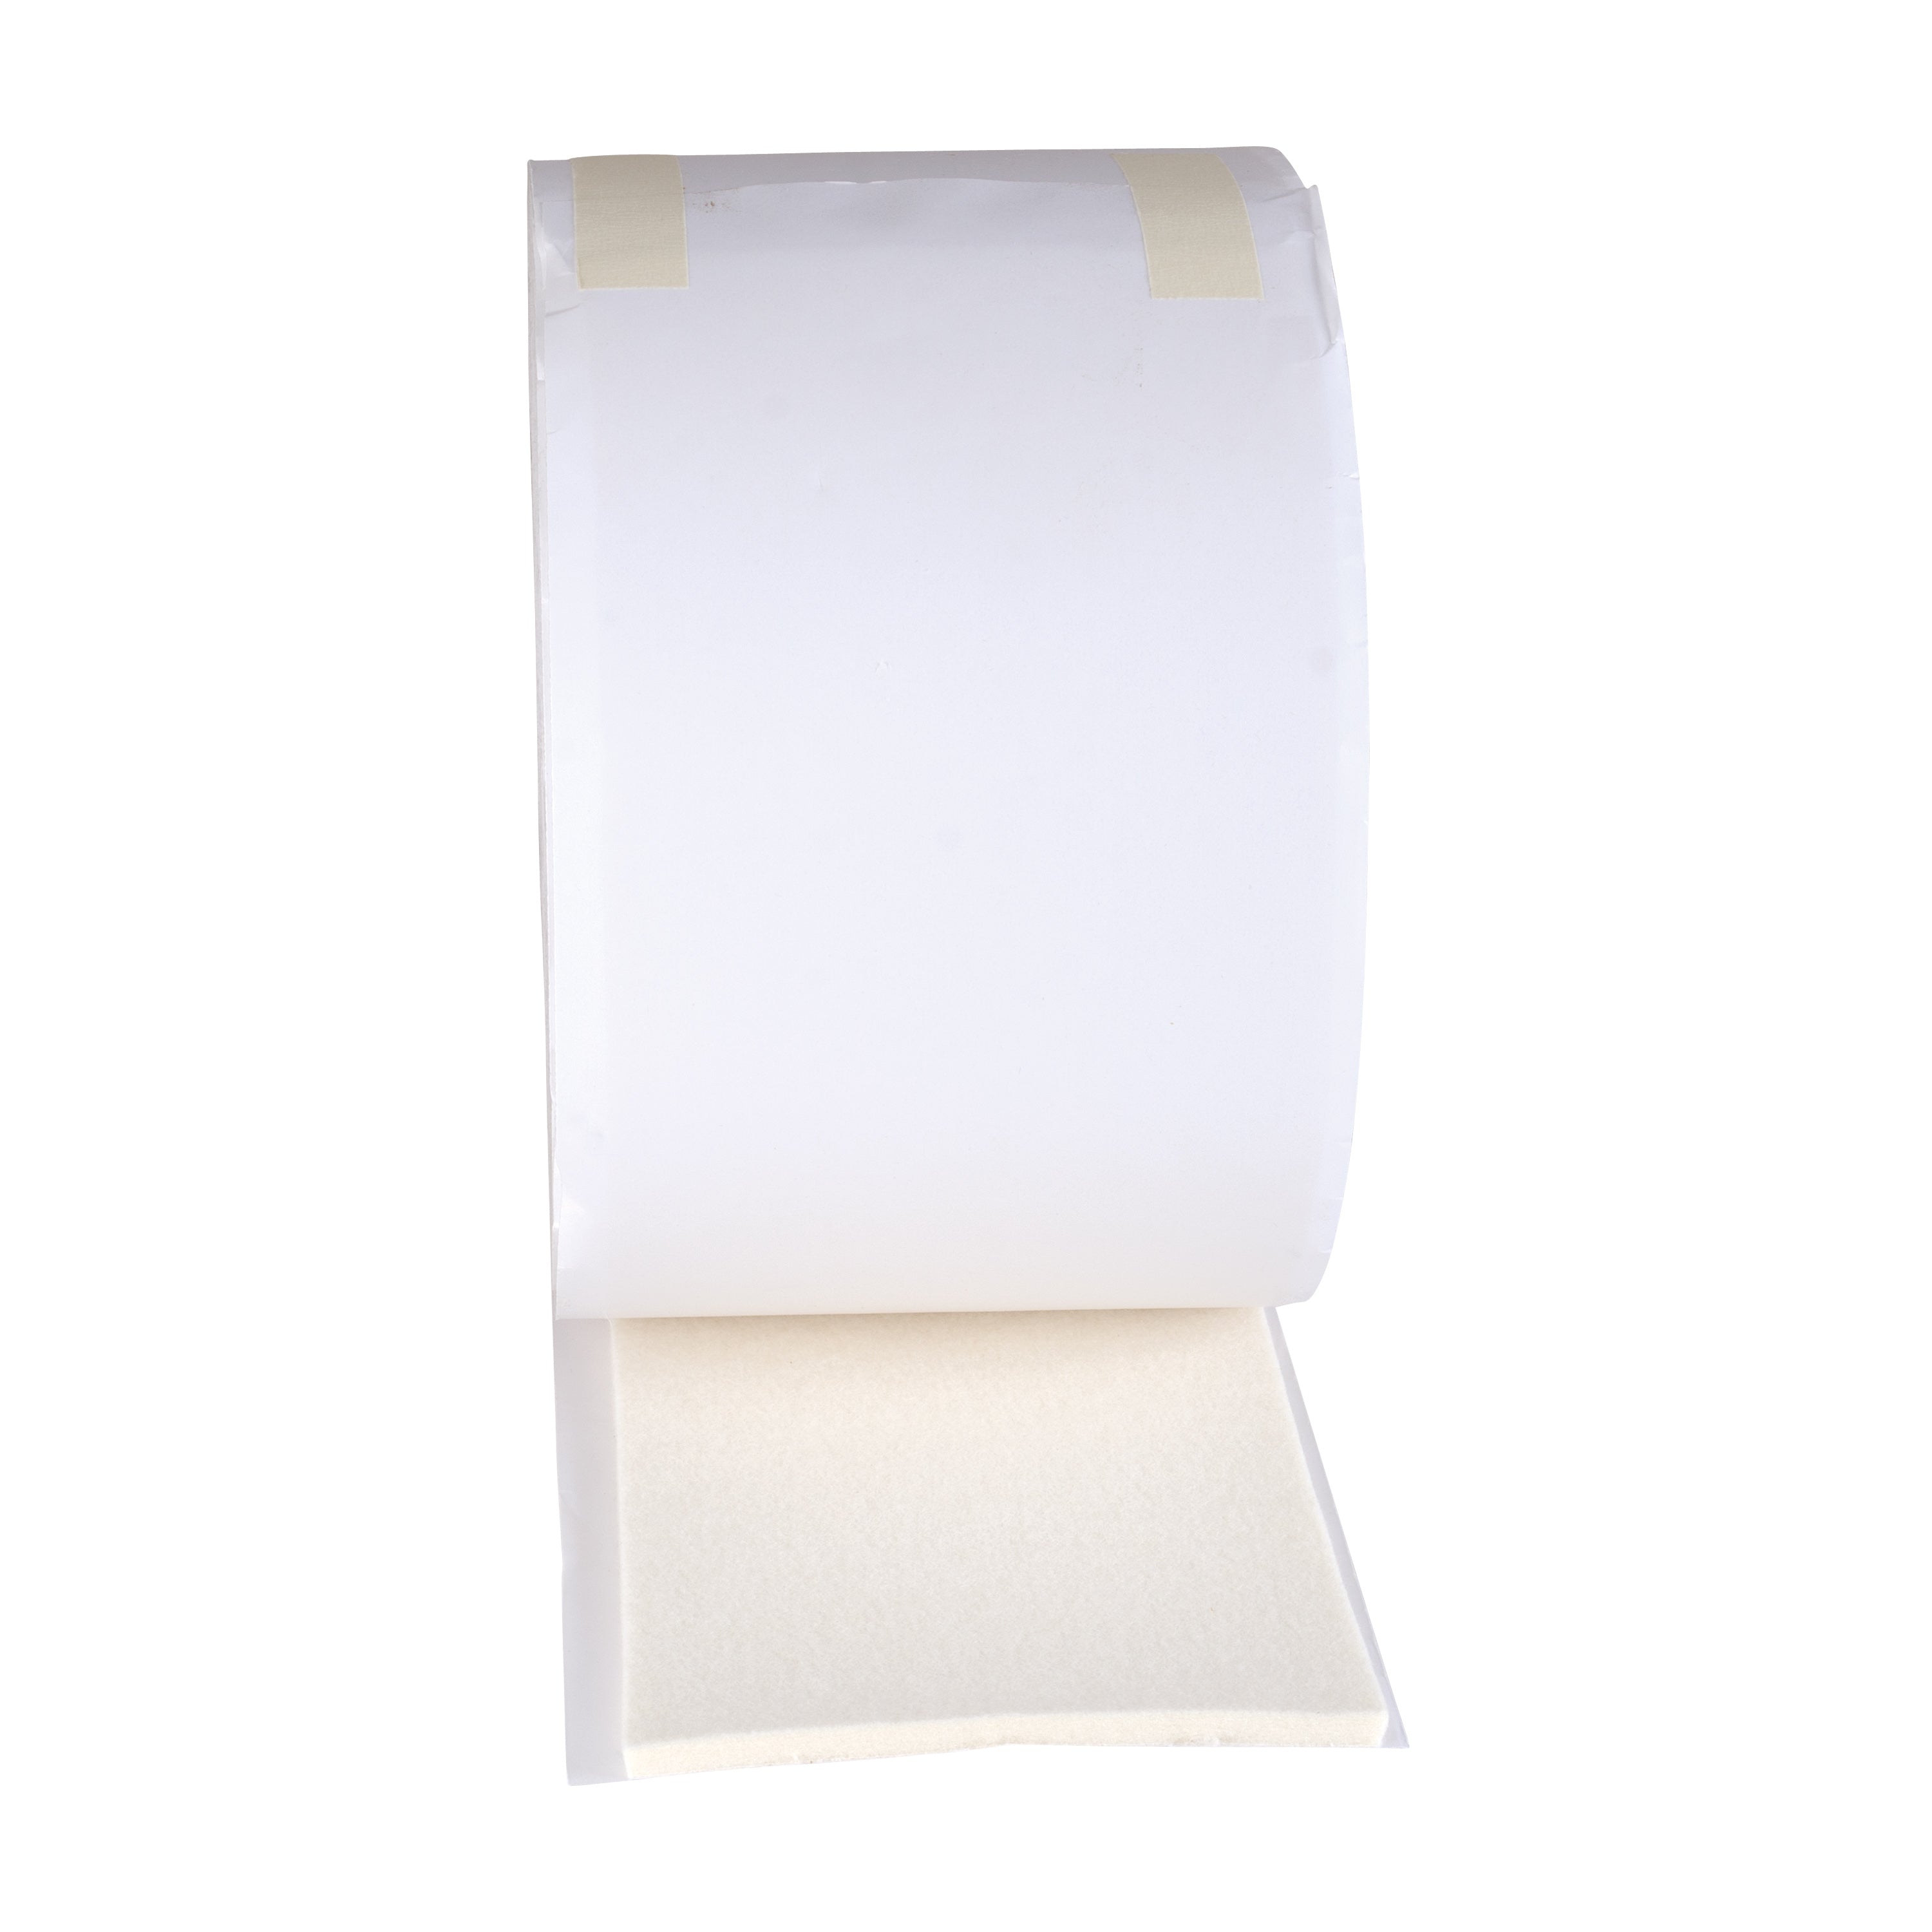 Stein's 1/4 White Jumbo Adhesive Felt Roll, 6 x 10 Yds AM-765